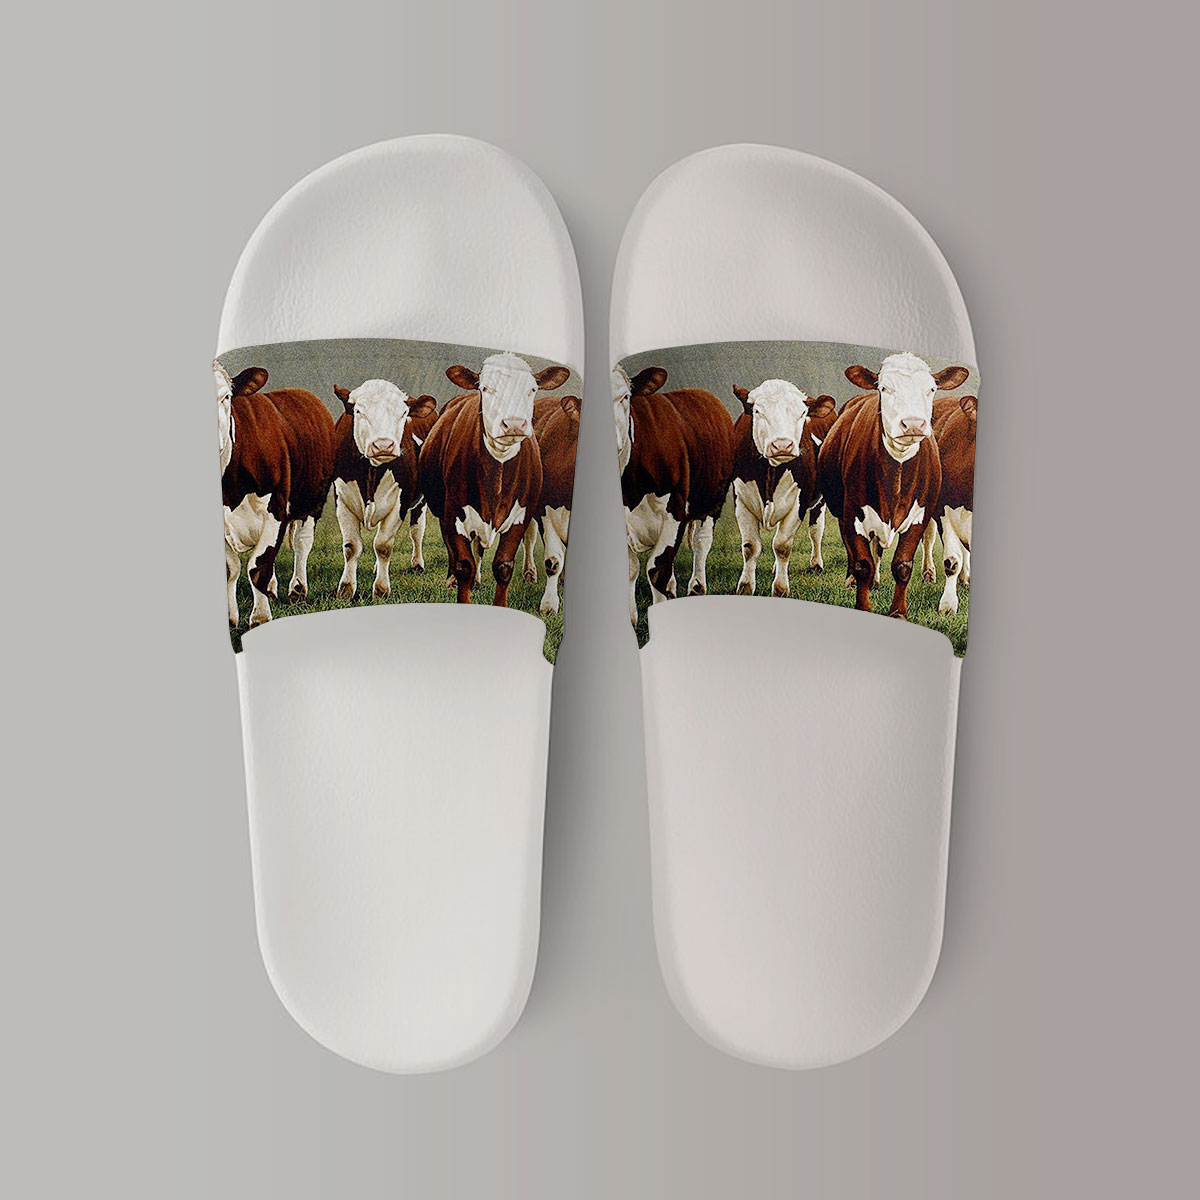 Four Cows Sandal